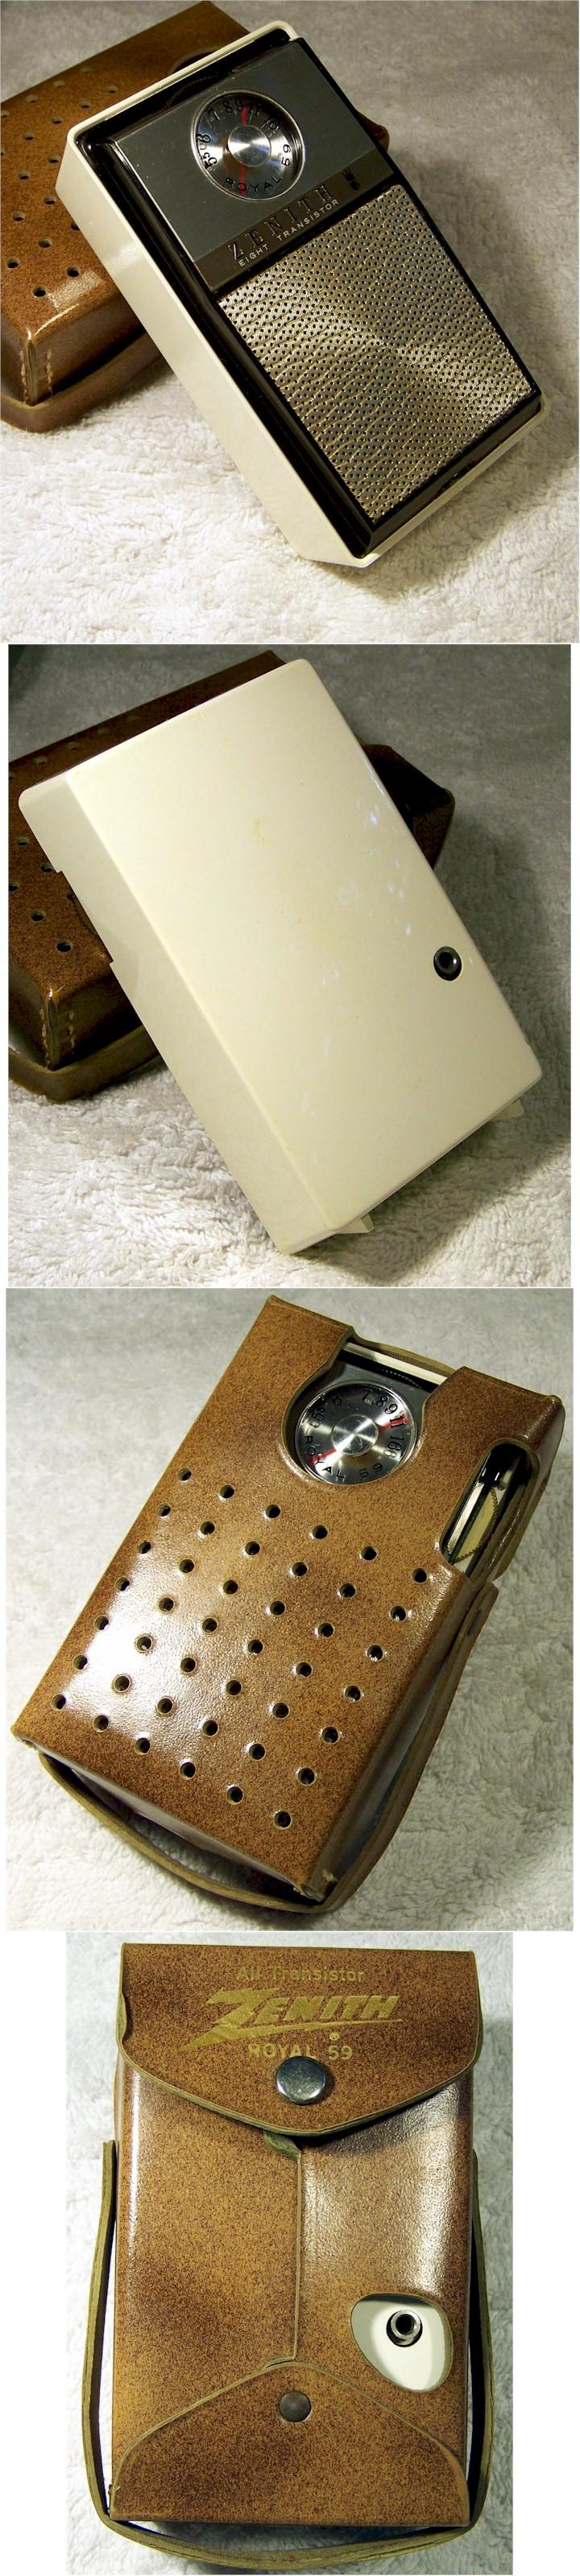 Zenith Royal 59-1 Transistor (1965)